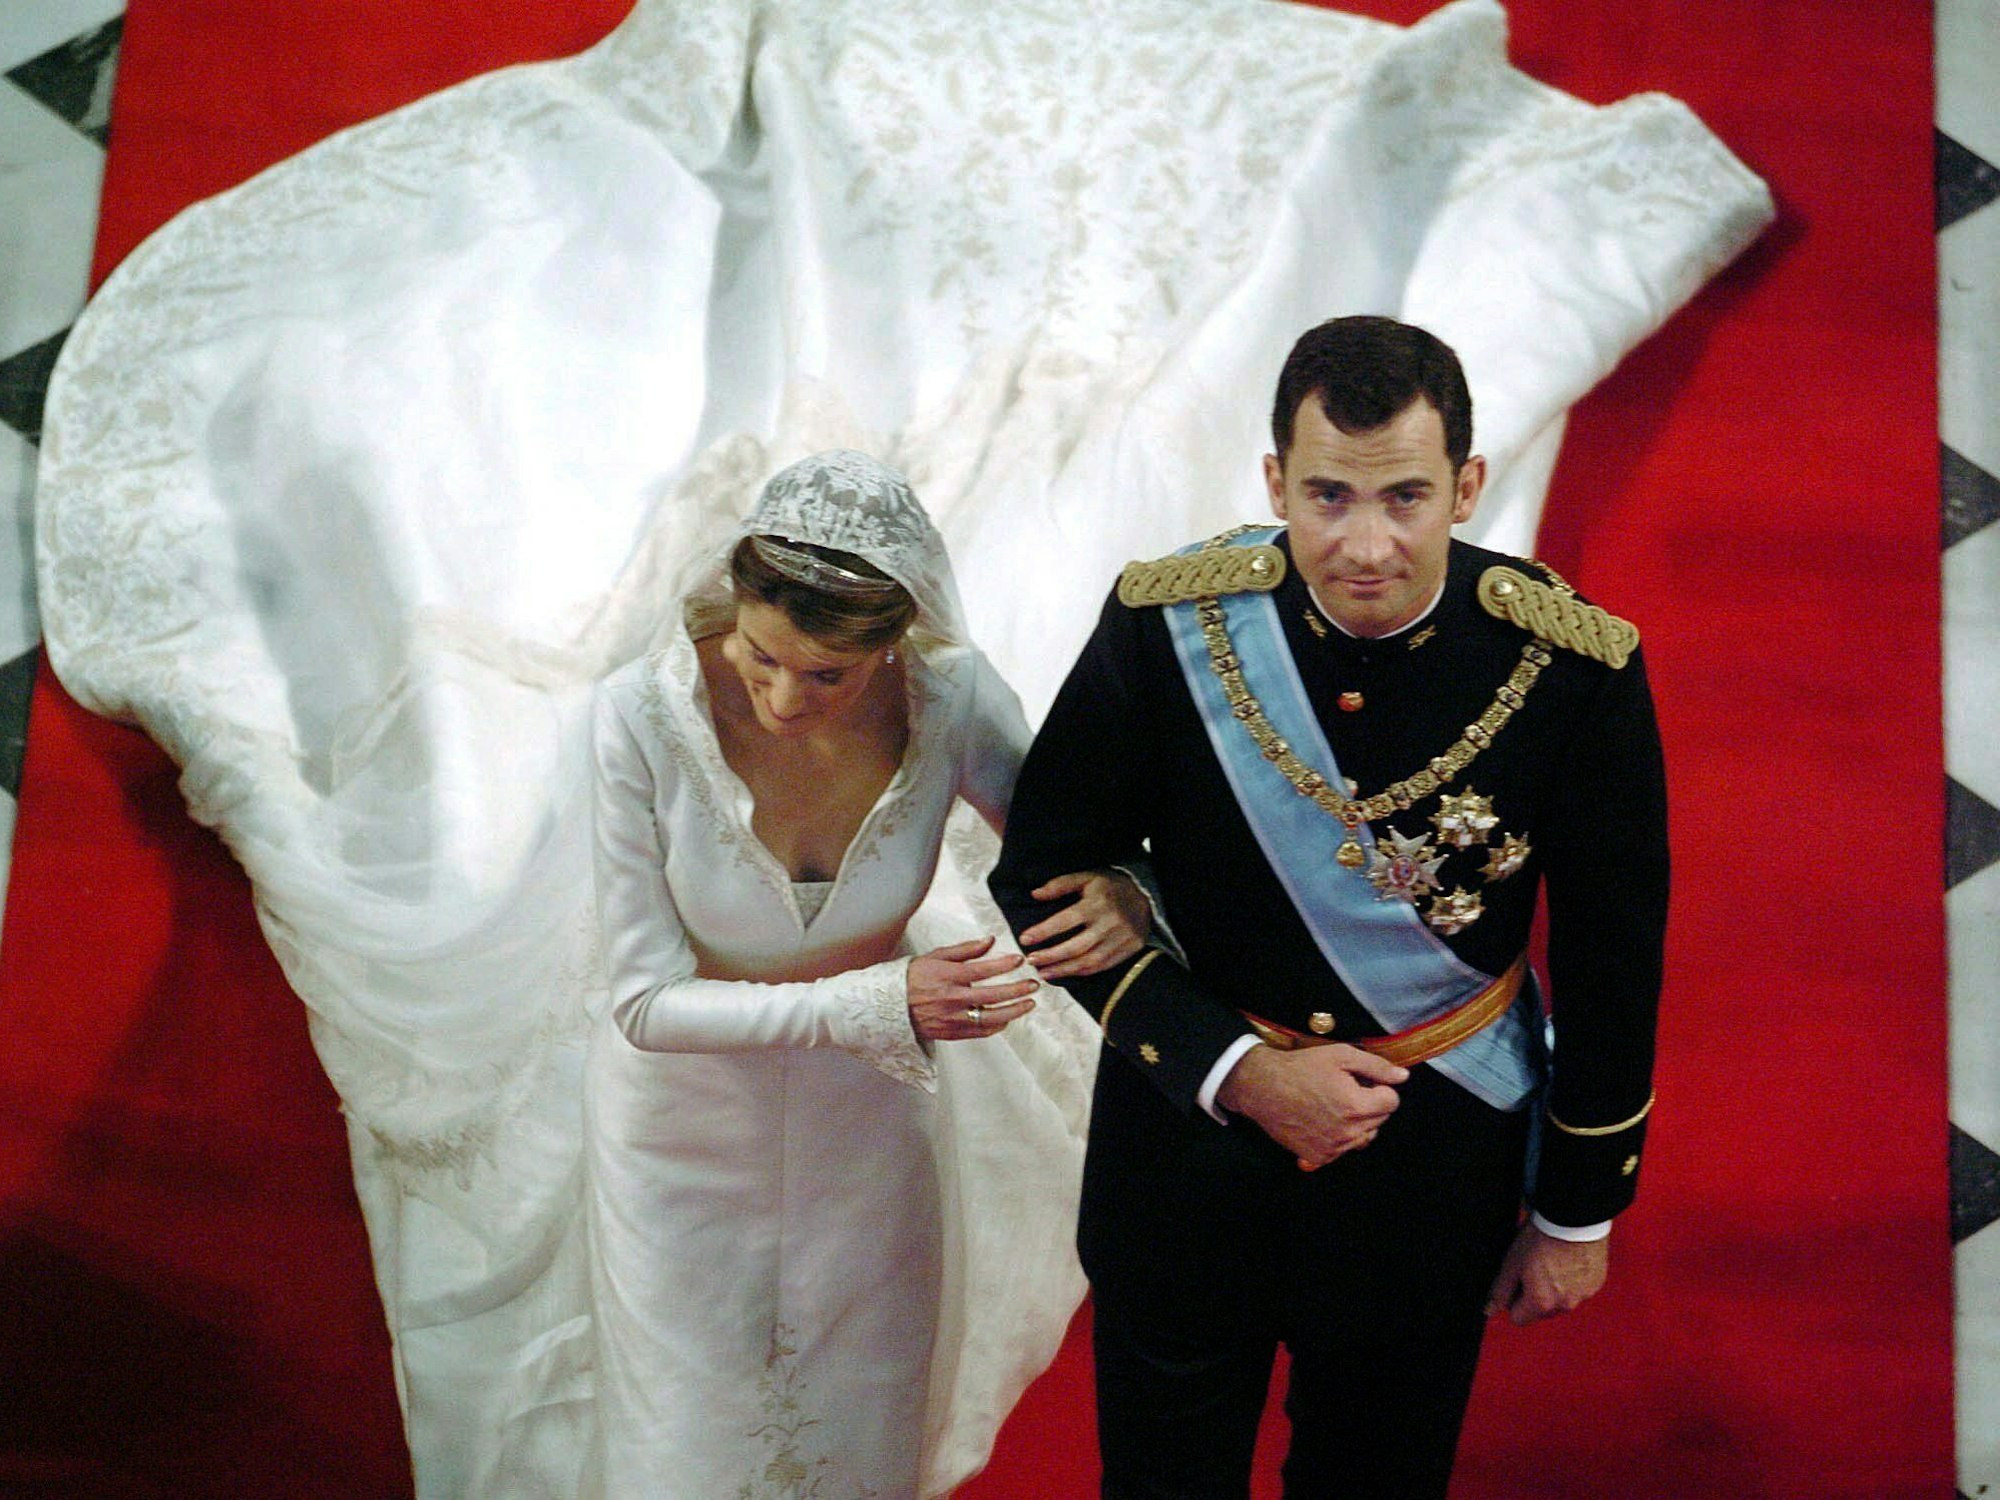 Am 22. Mai 2004 heiratete Spaniens Kronprinz Felipe die geschiedene TV-Journalistin Letizia Ortiz.